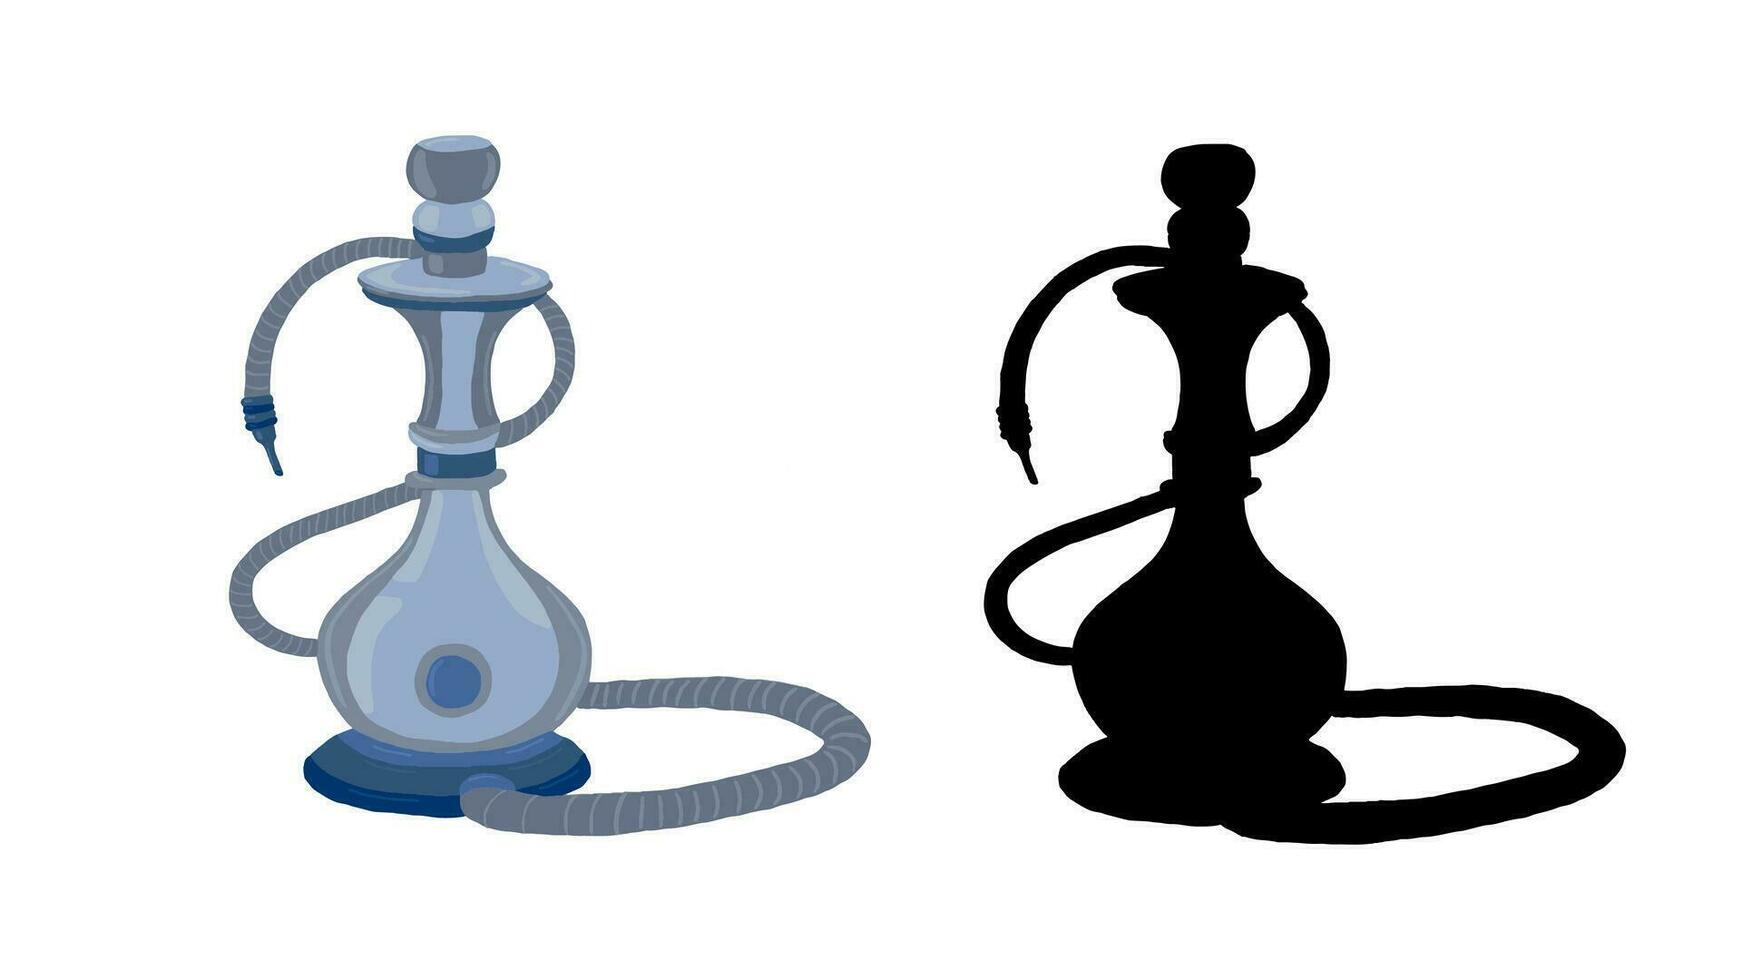 azul vaso narguile y negro narguile silueta, vector ilustración aislado en blanco antecedentes. atributo para de fumar. Arábica, turco shisha con de fumar tubo